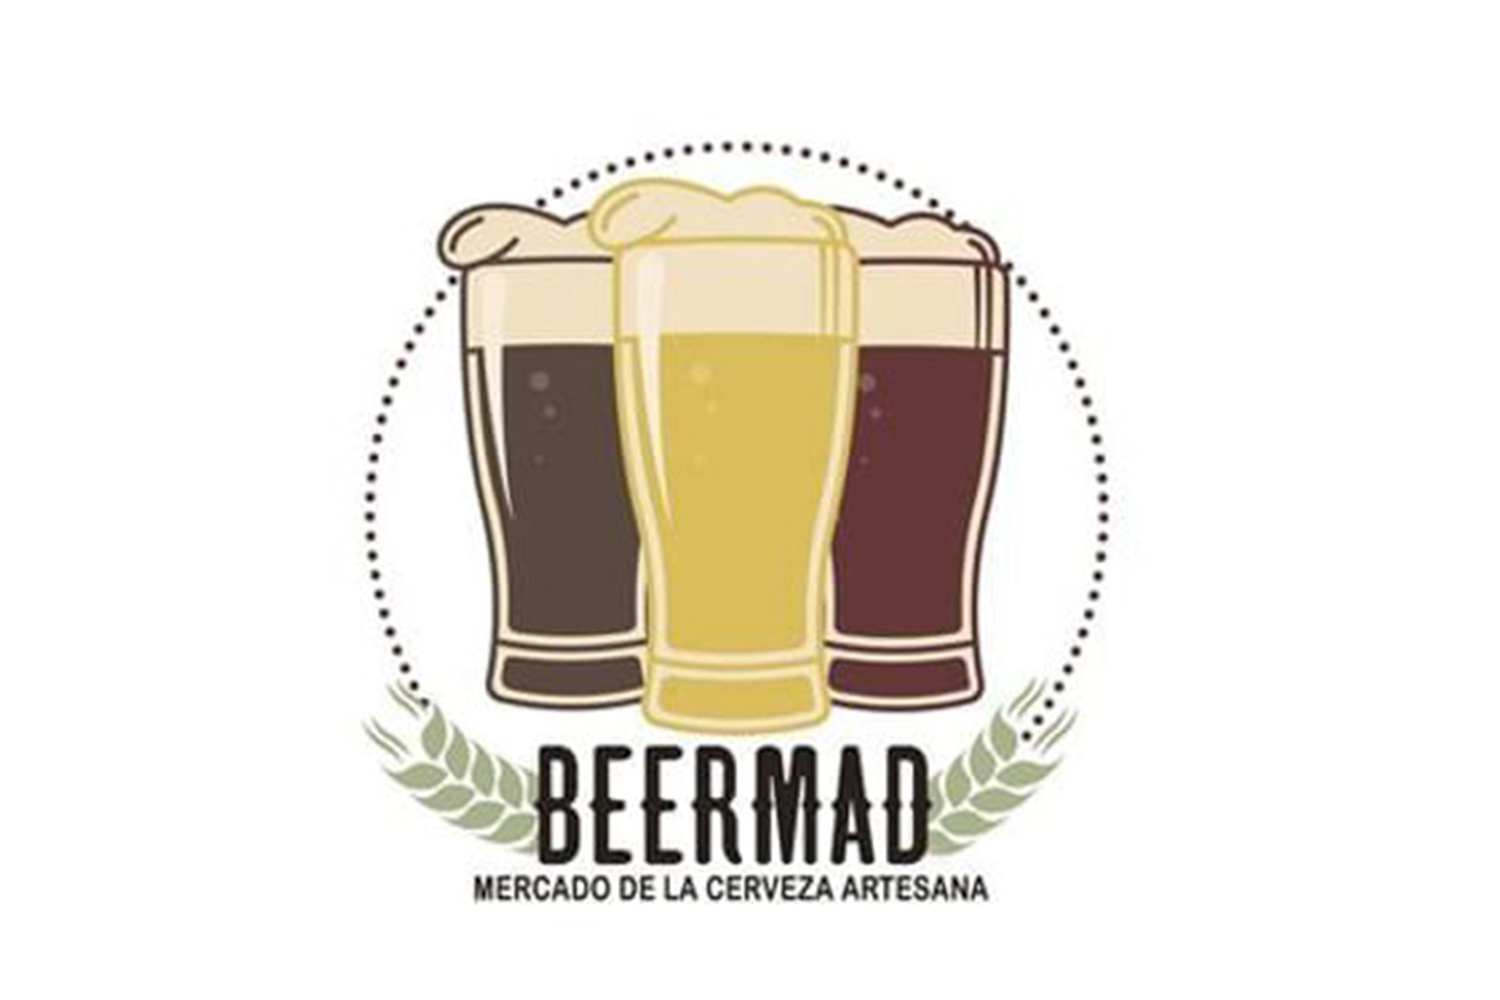 BeerMad, the craft beer fair